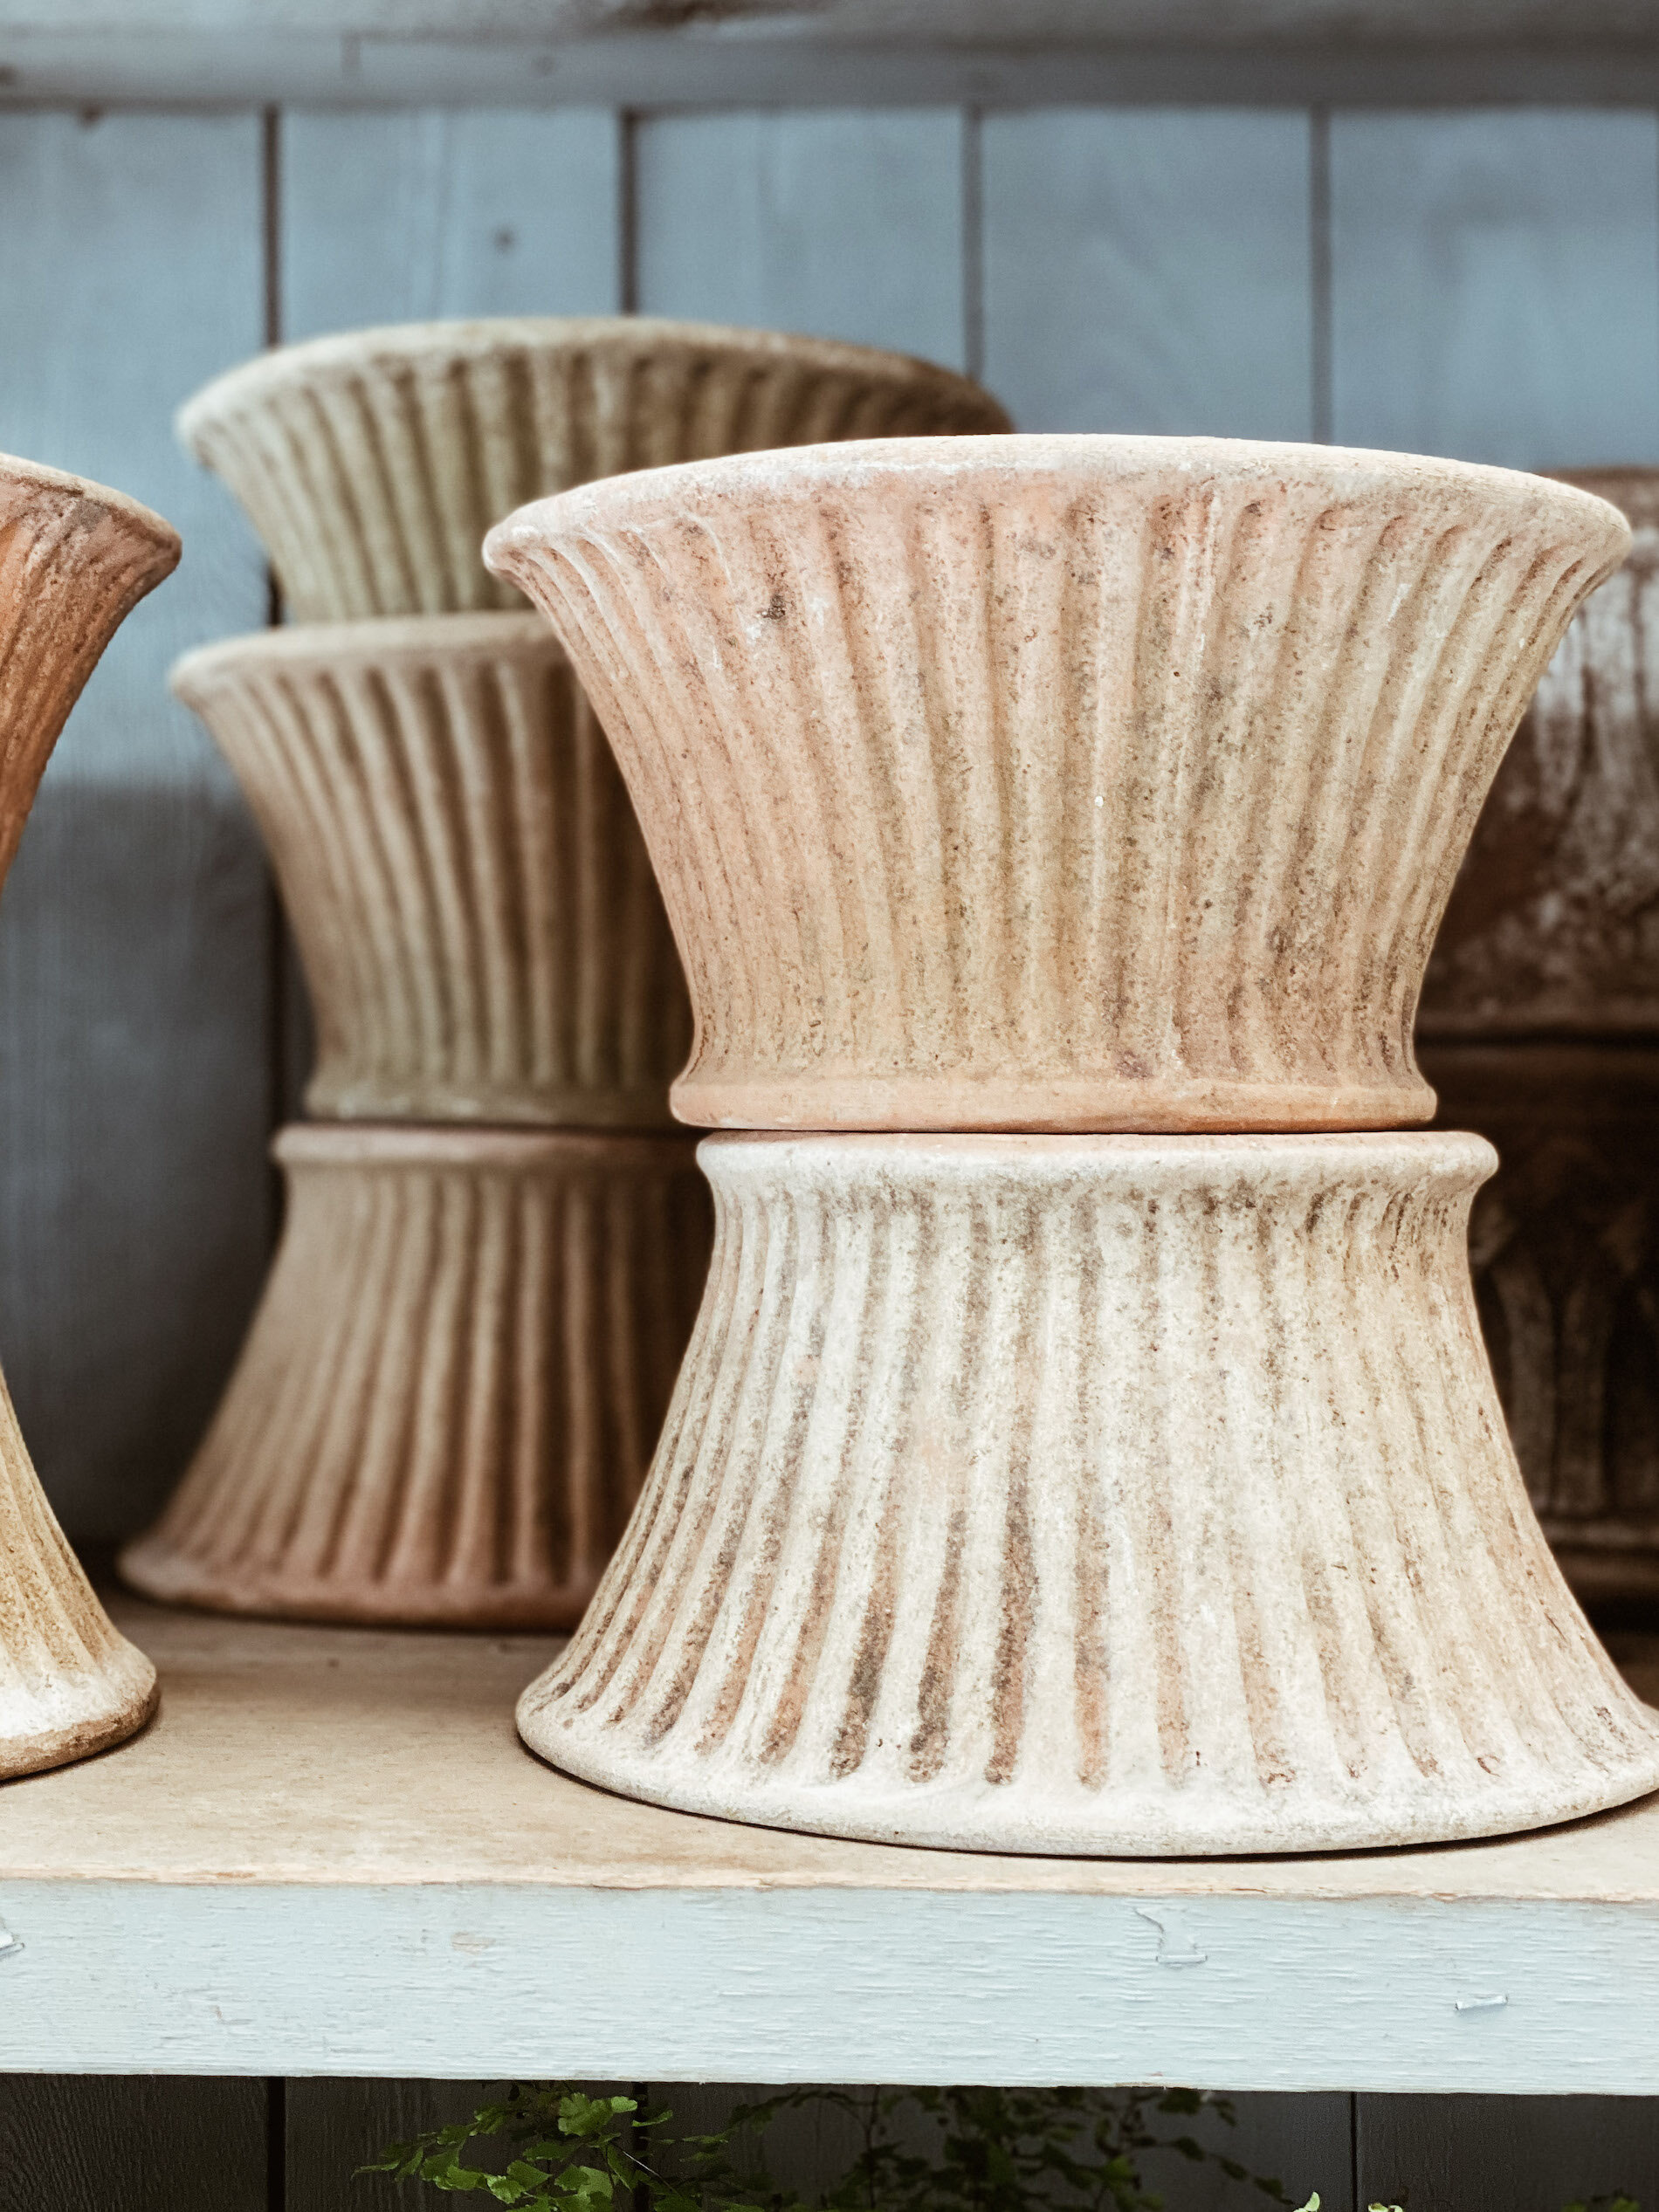 weathered terracotta pots2.jpg